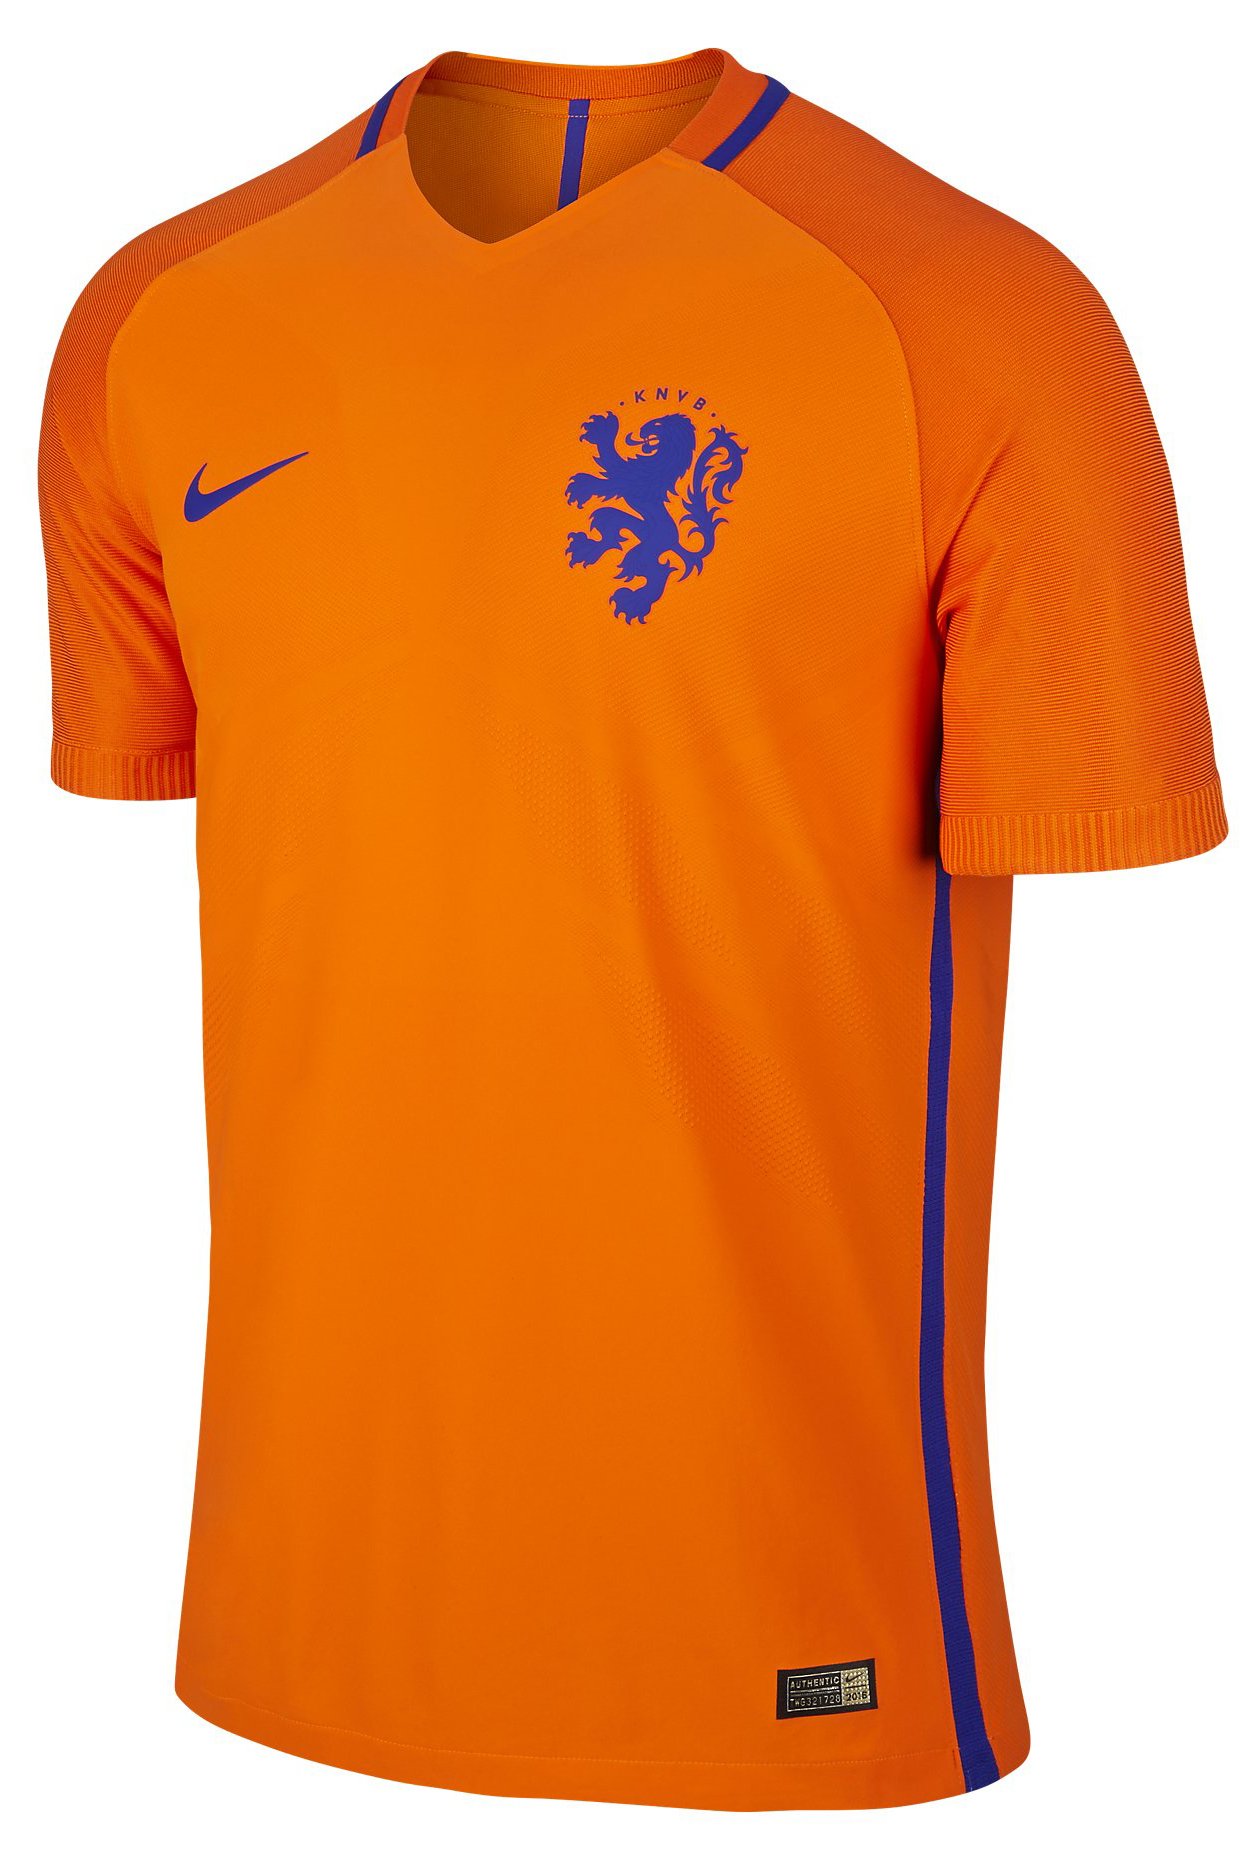 Let op Cordelia Pedagogie Shirt Nike 2016 Netherlands Vapor Match Home - Top4Football.com